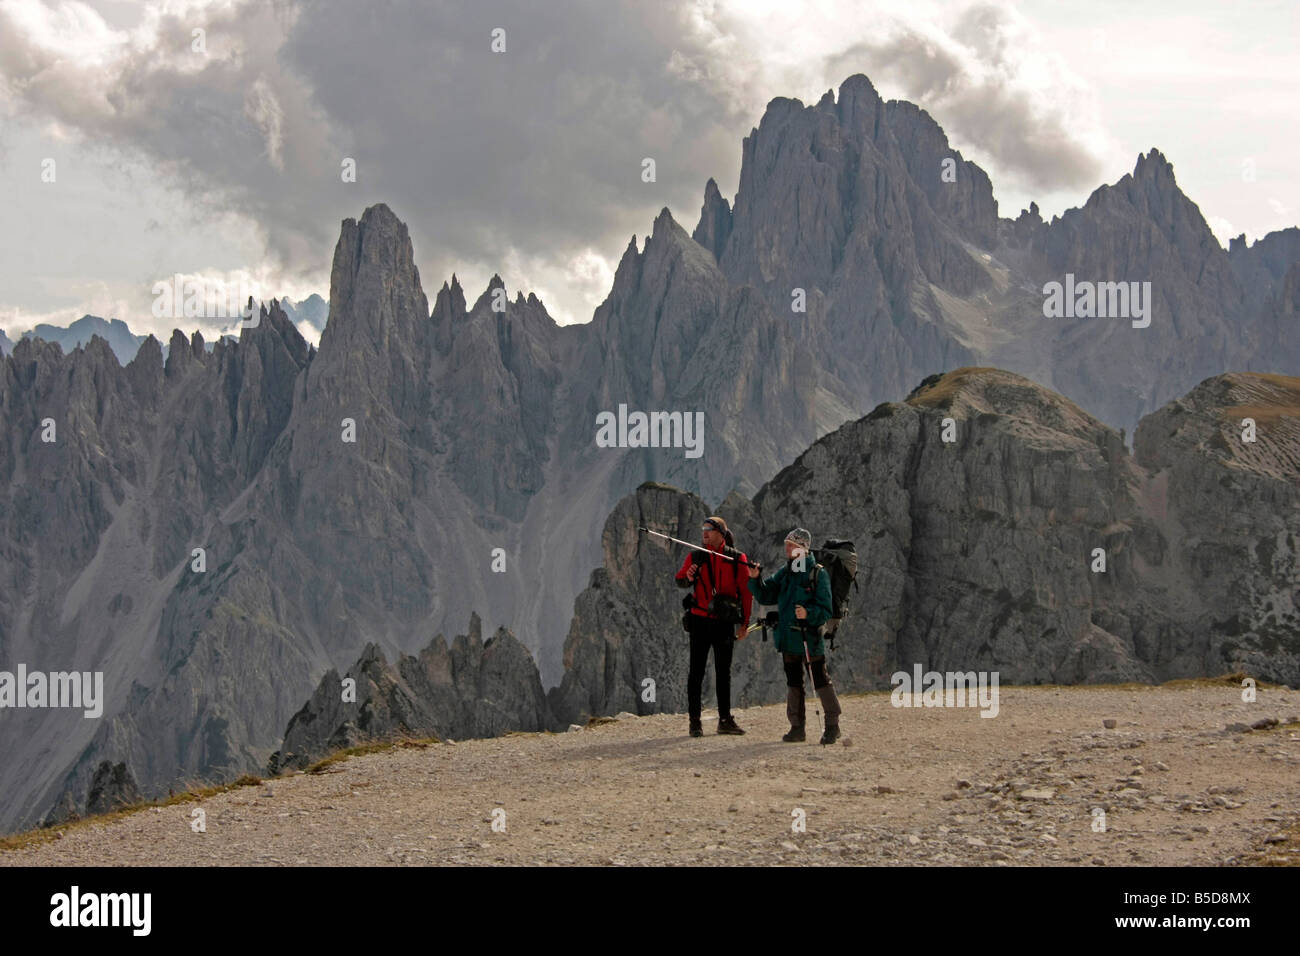 Hikers in the Sexten Dolomites around the Tre Cime di Lavaredo or three peaks of Lavaredo near Toblach in northeastern Italy Stock Photo